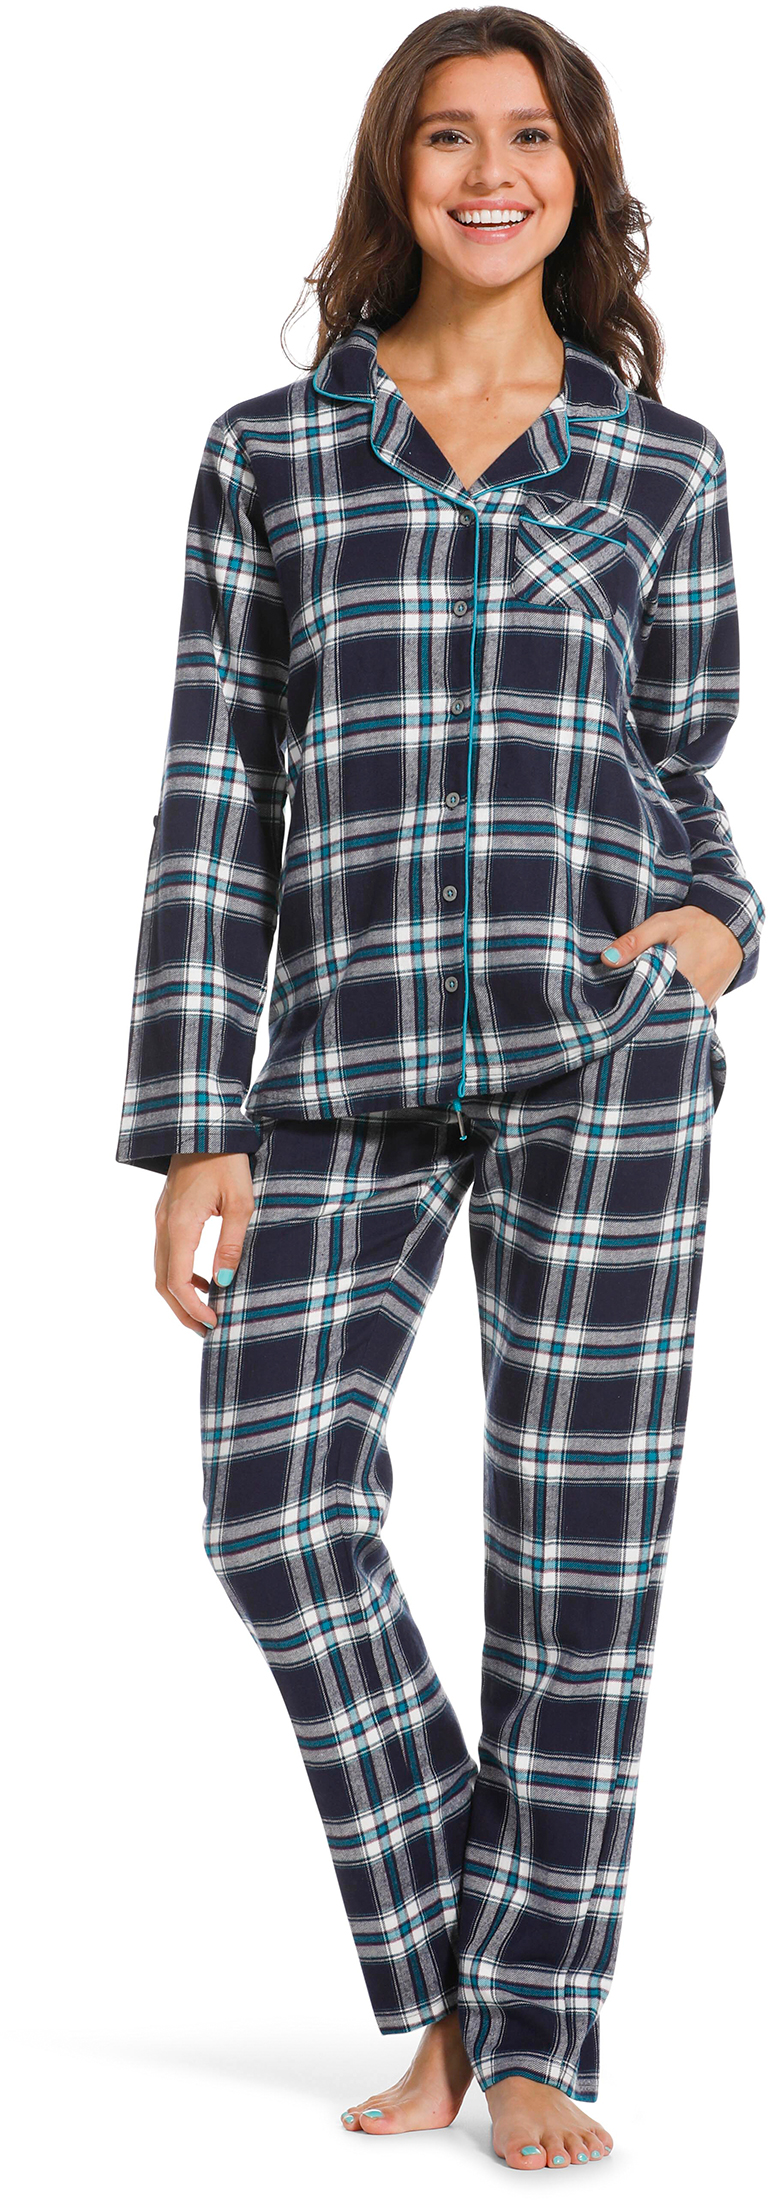 Rebelle dames pyjama flanel 21222-408-6 - Blauw - 46